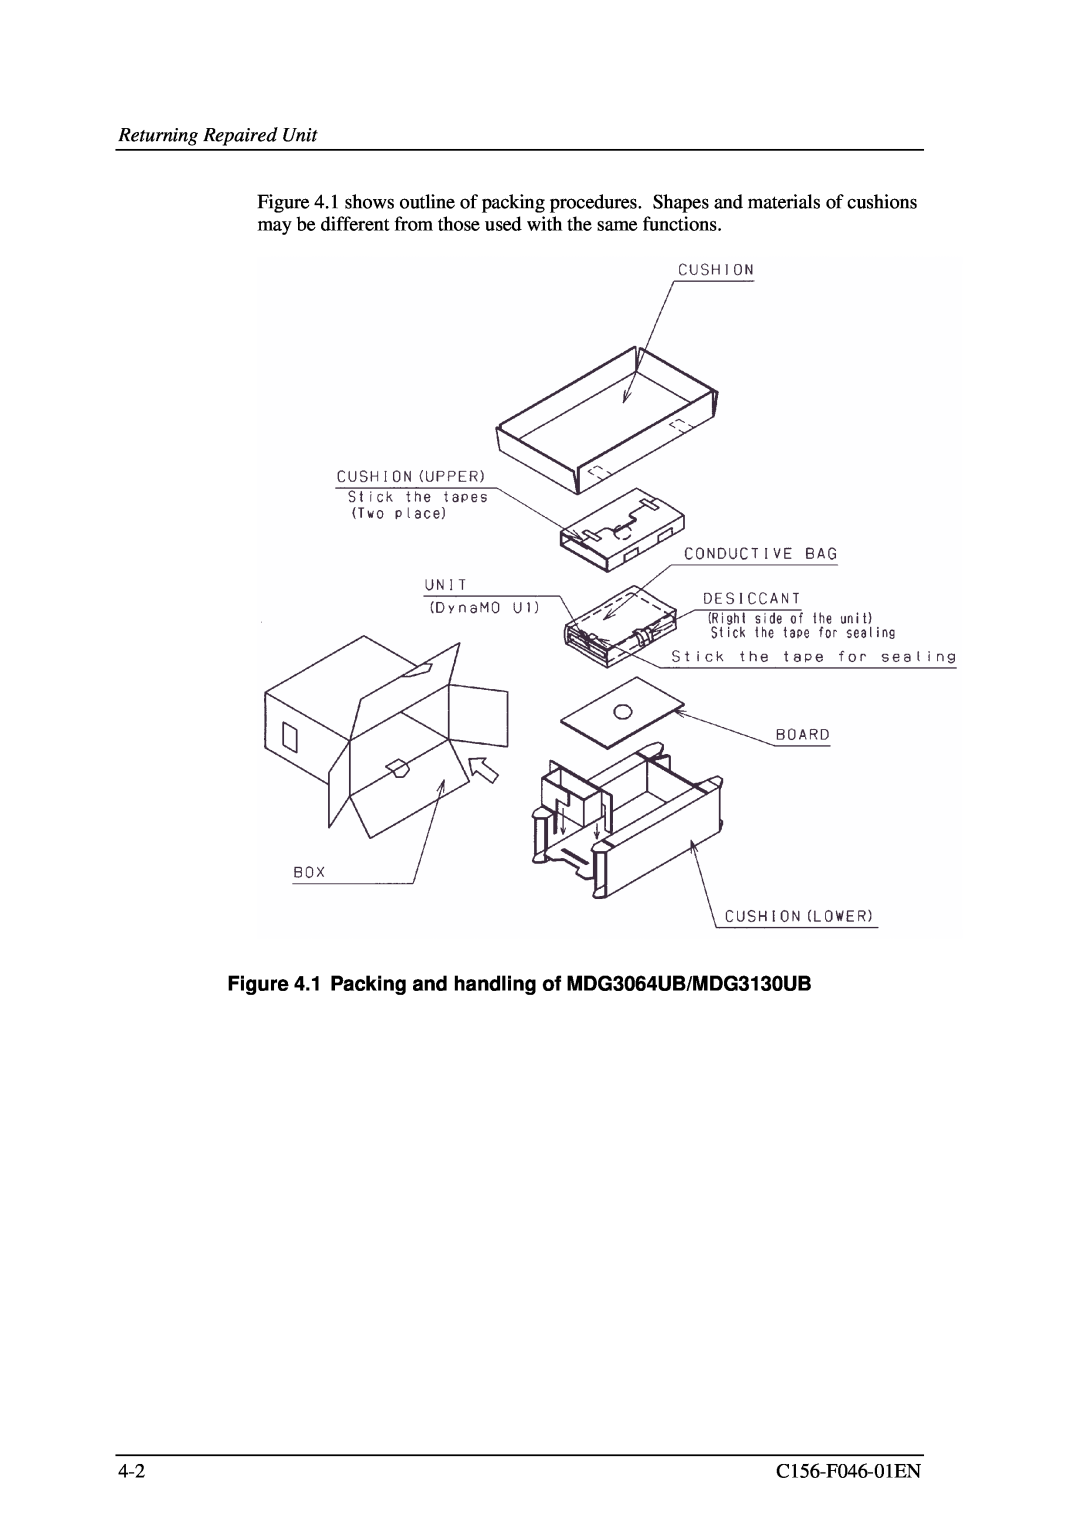 Fujitsu manual Returning Repaired Unit, 1 Packing and handling of MDG3064UB/MDG3130UB 